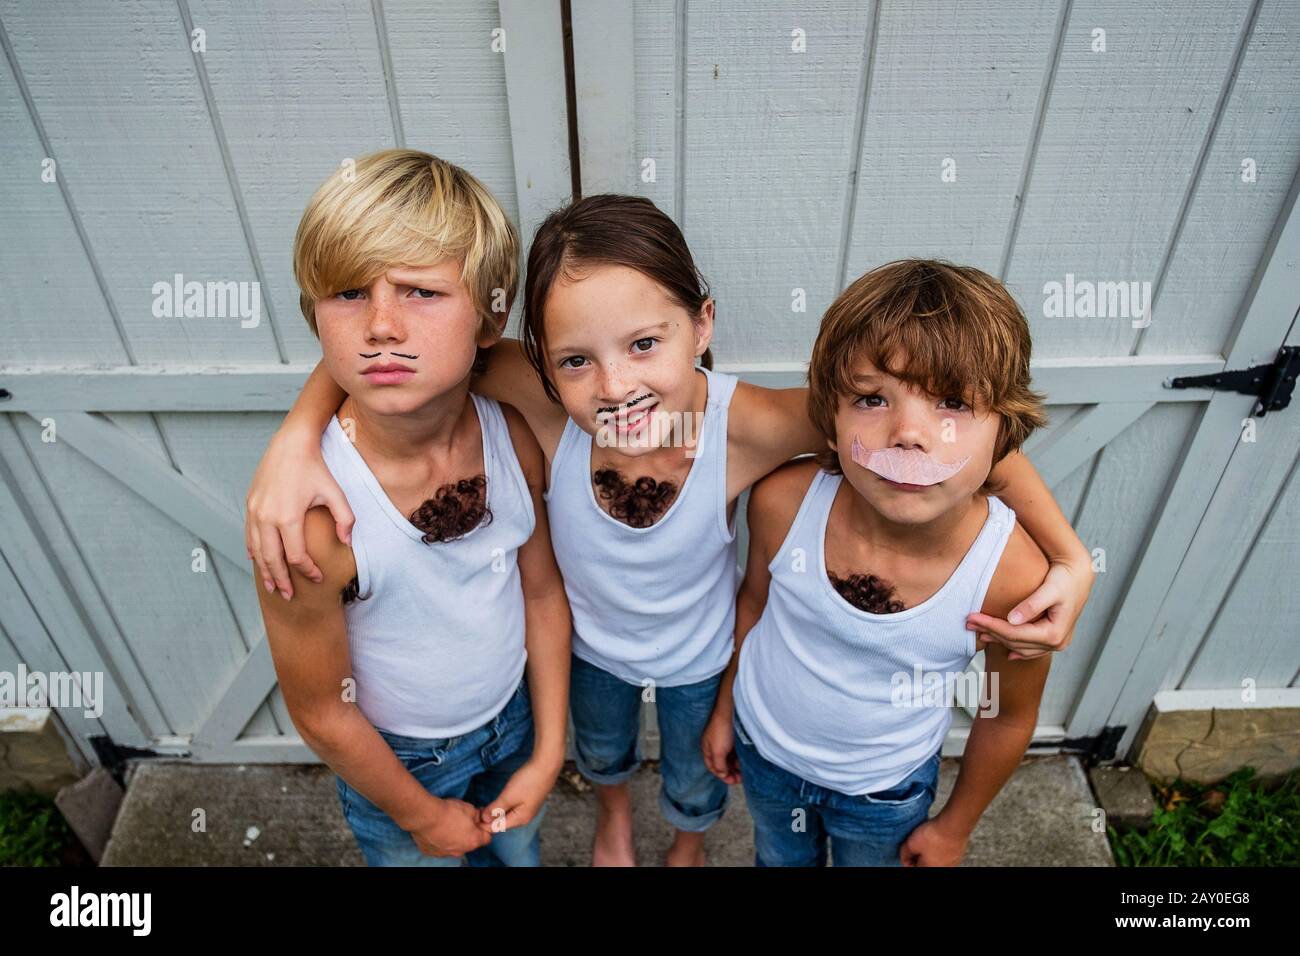 Three children dressed as musclemen, USA Stock Photo